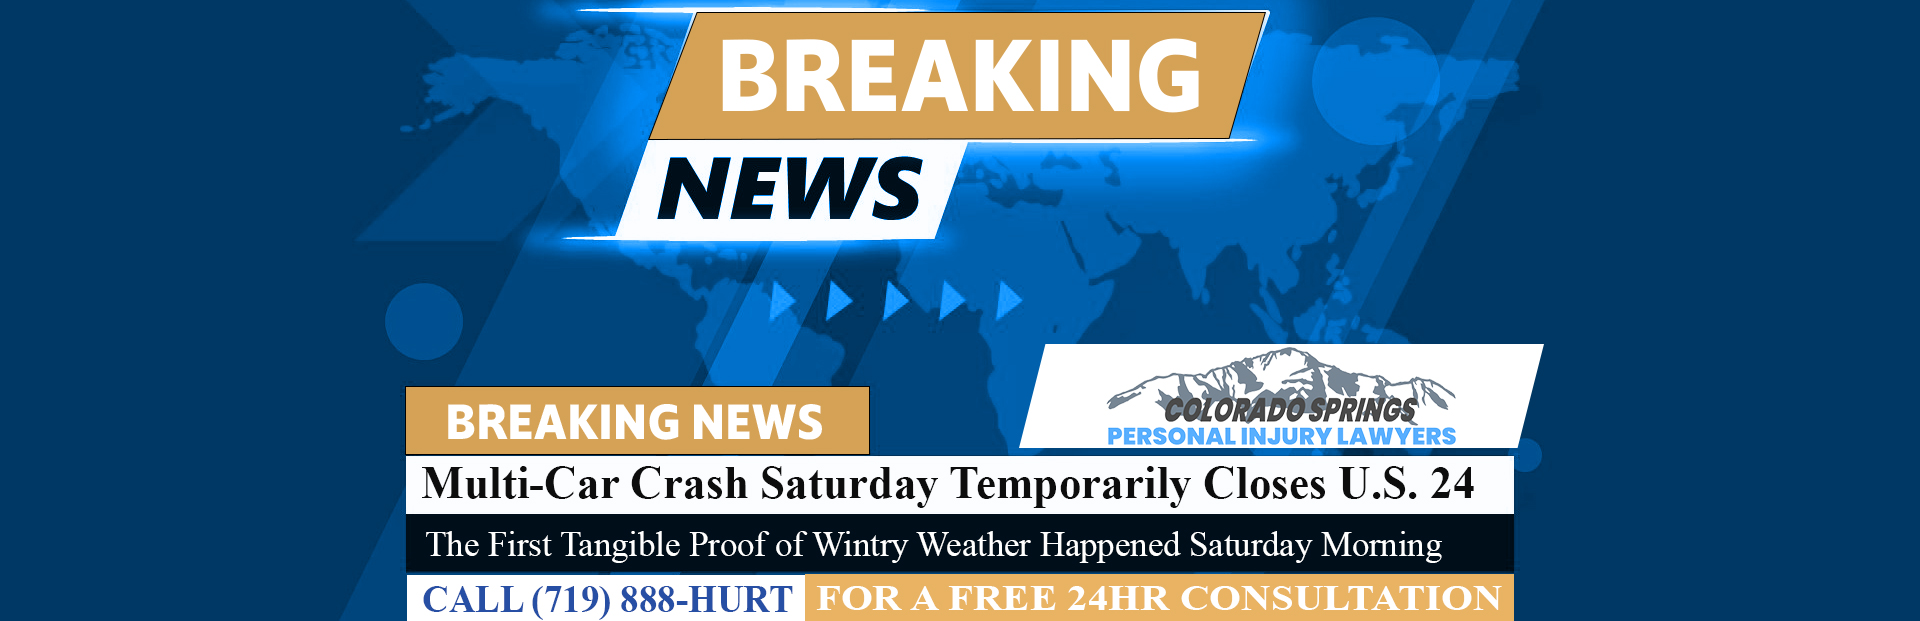 [10-29-23] Multi-Car Crash Saturday Temporarily Closes Eastbound U.S. 24 in Ute Pass; Icy Conditions Cited